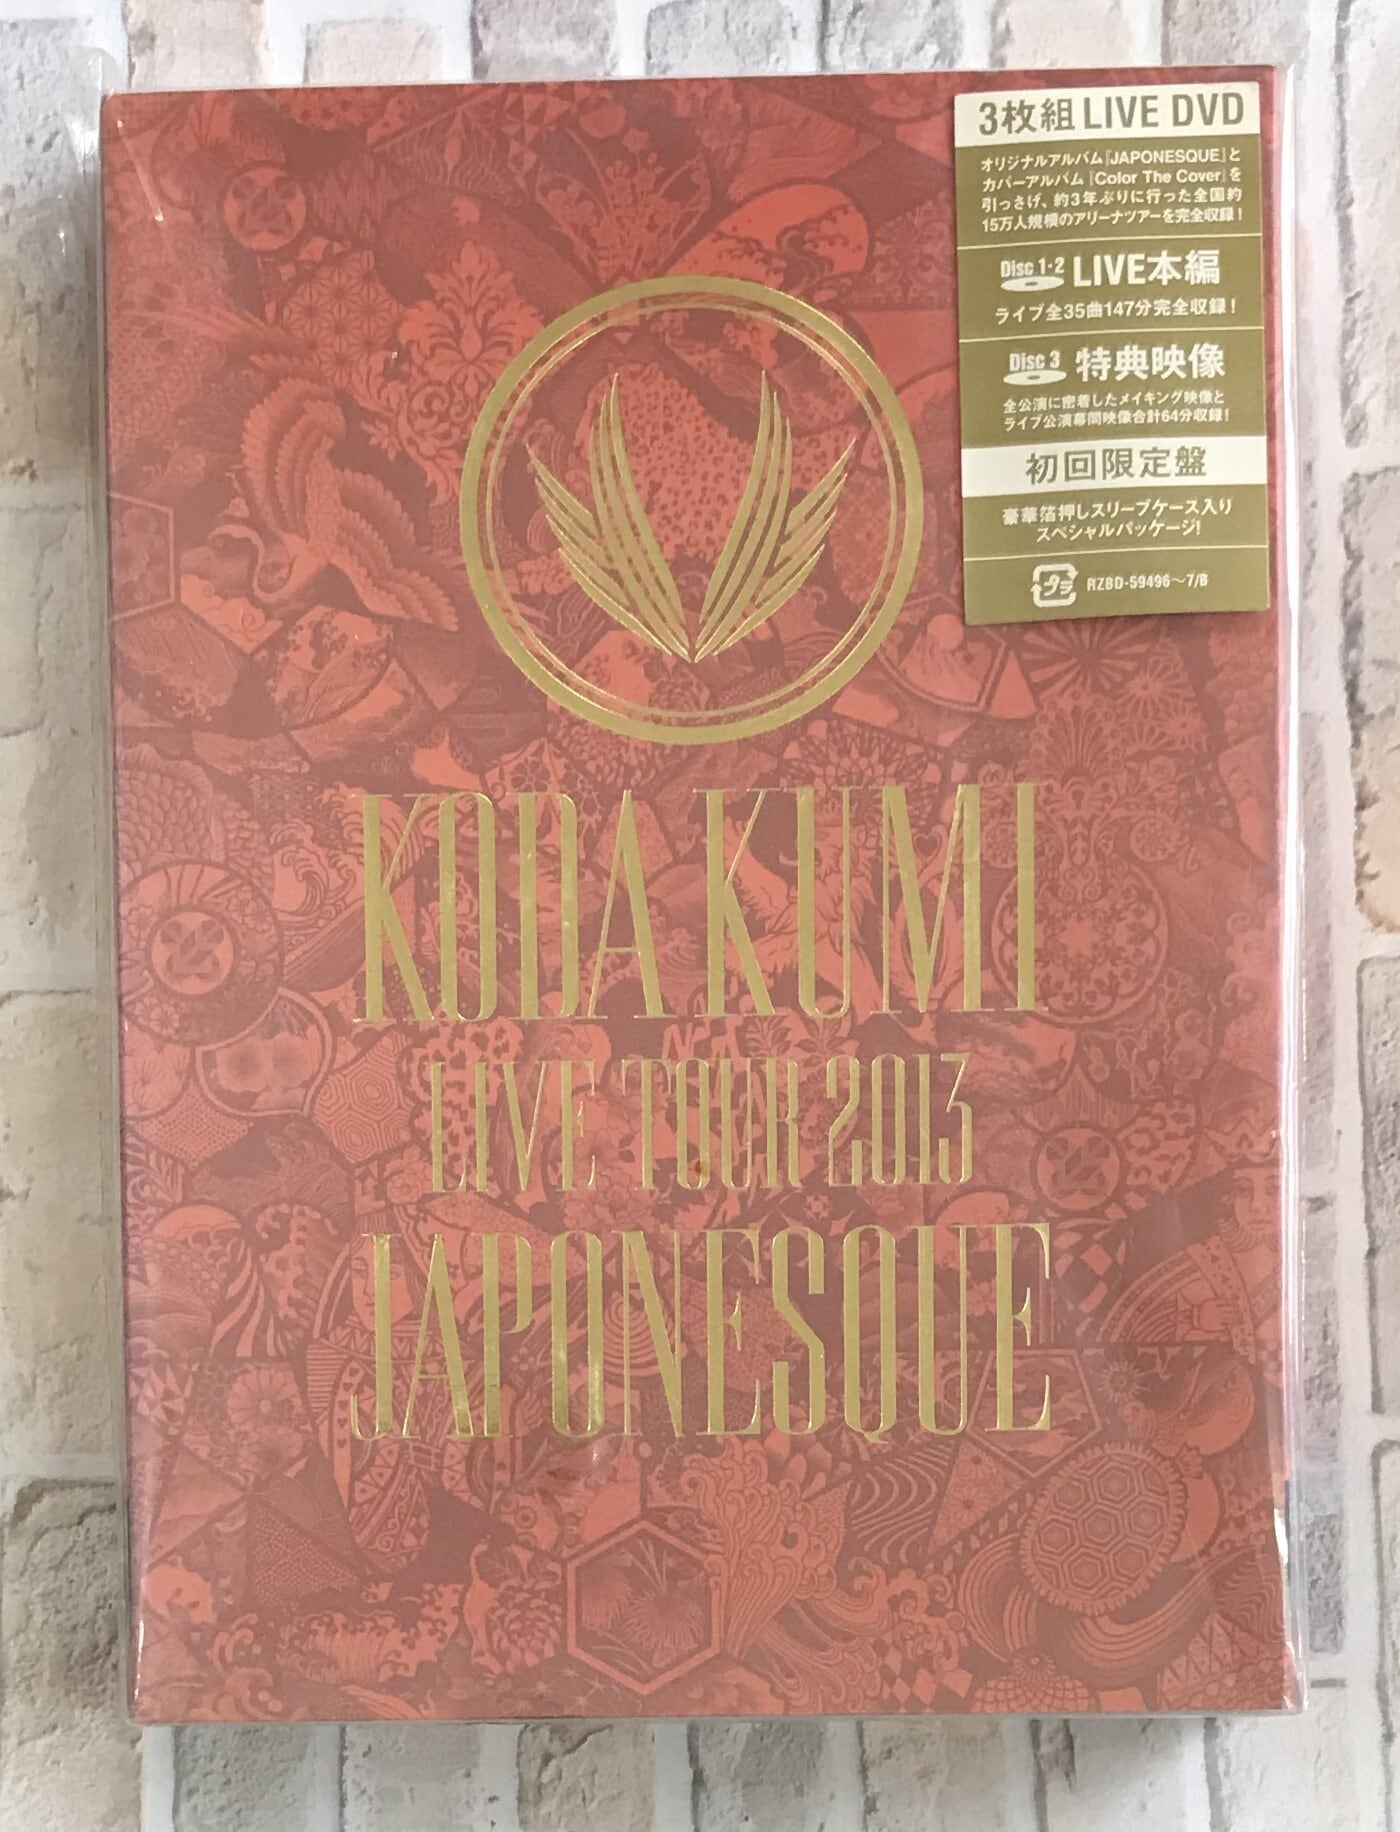 倖田來未 / KODA KUMI LIVE TOUR 2013 JAPONESQUE / 初回版 (DVD